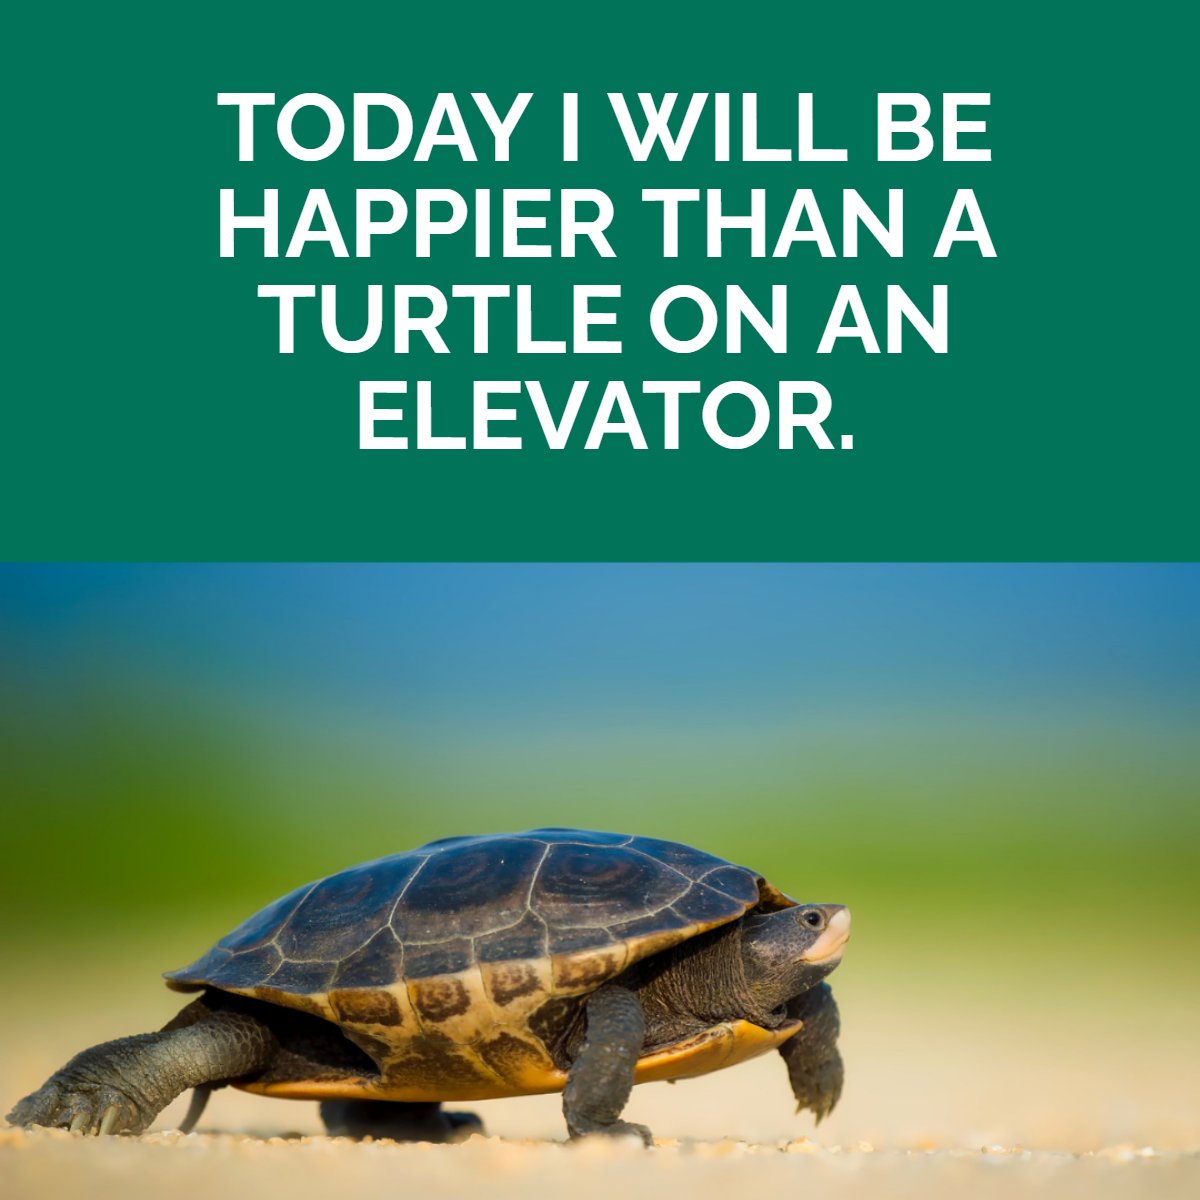 Happier than ever 🐢😋

#turtlesofinstagram  #turtlepower  #happierthanever  #happy  #happyhour  #happierme  #funnyrealtor